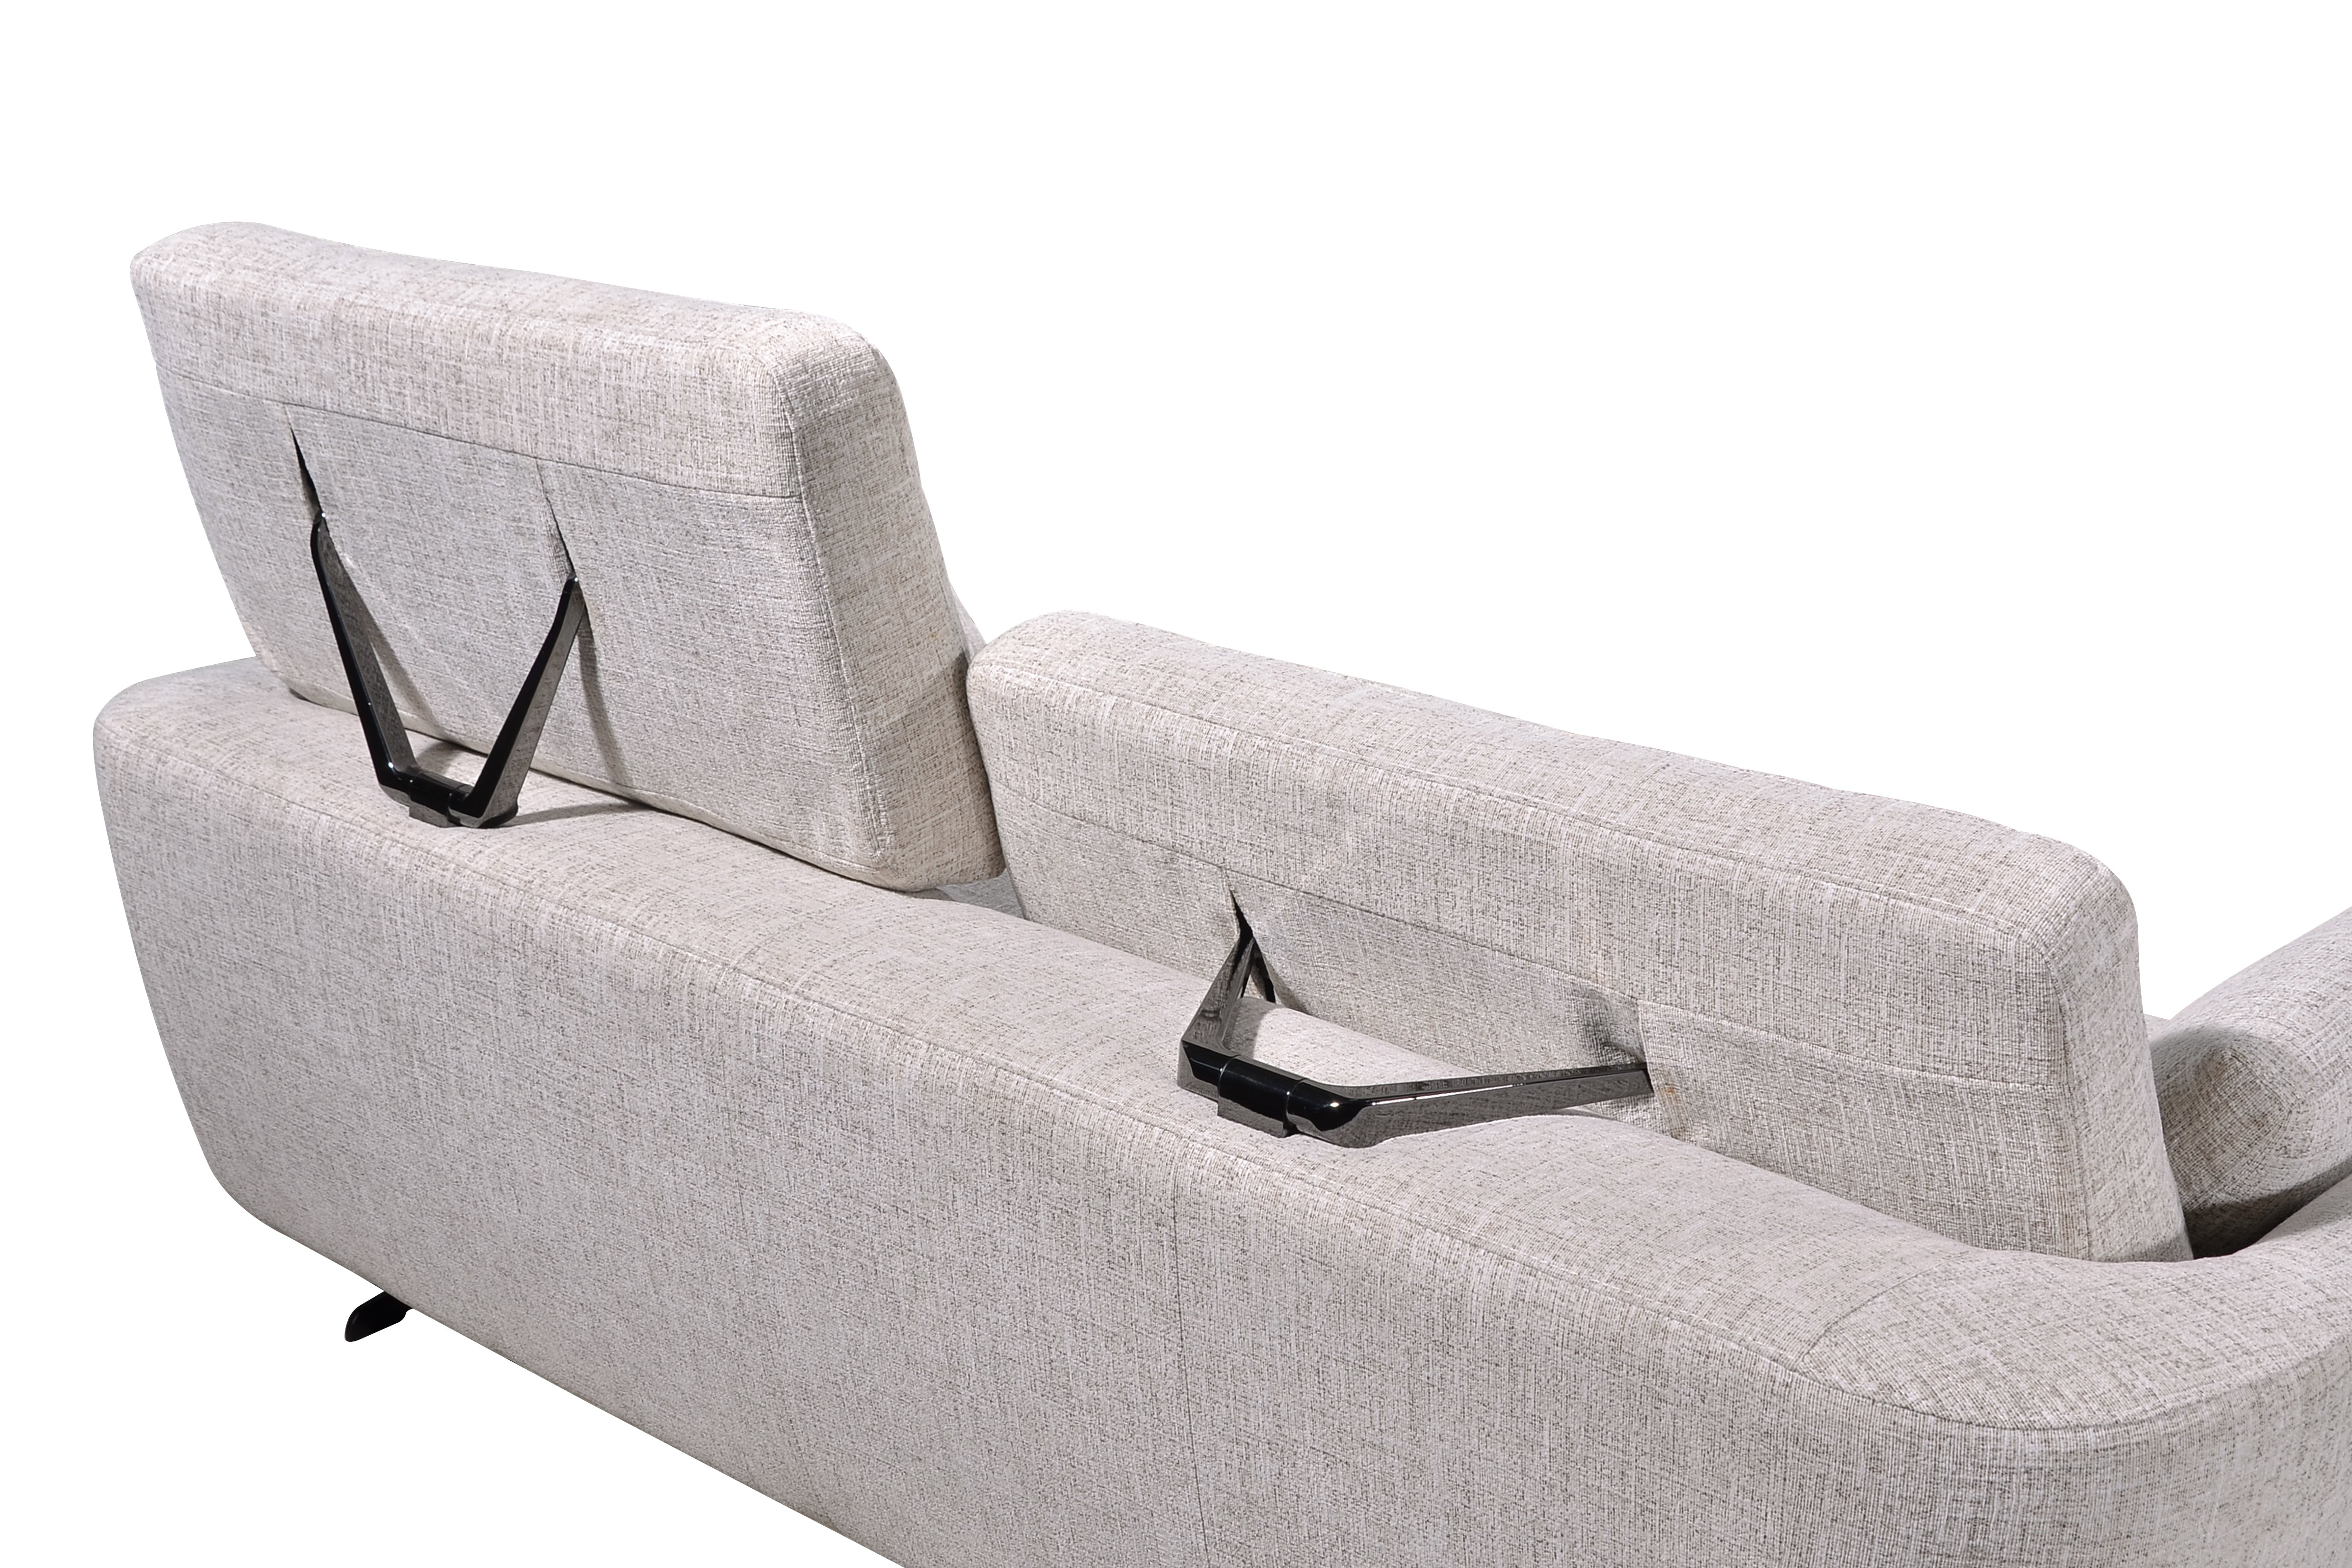 HELIOS 3 Seater Sofa in Fabric by Castilla